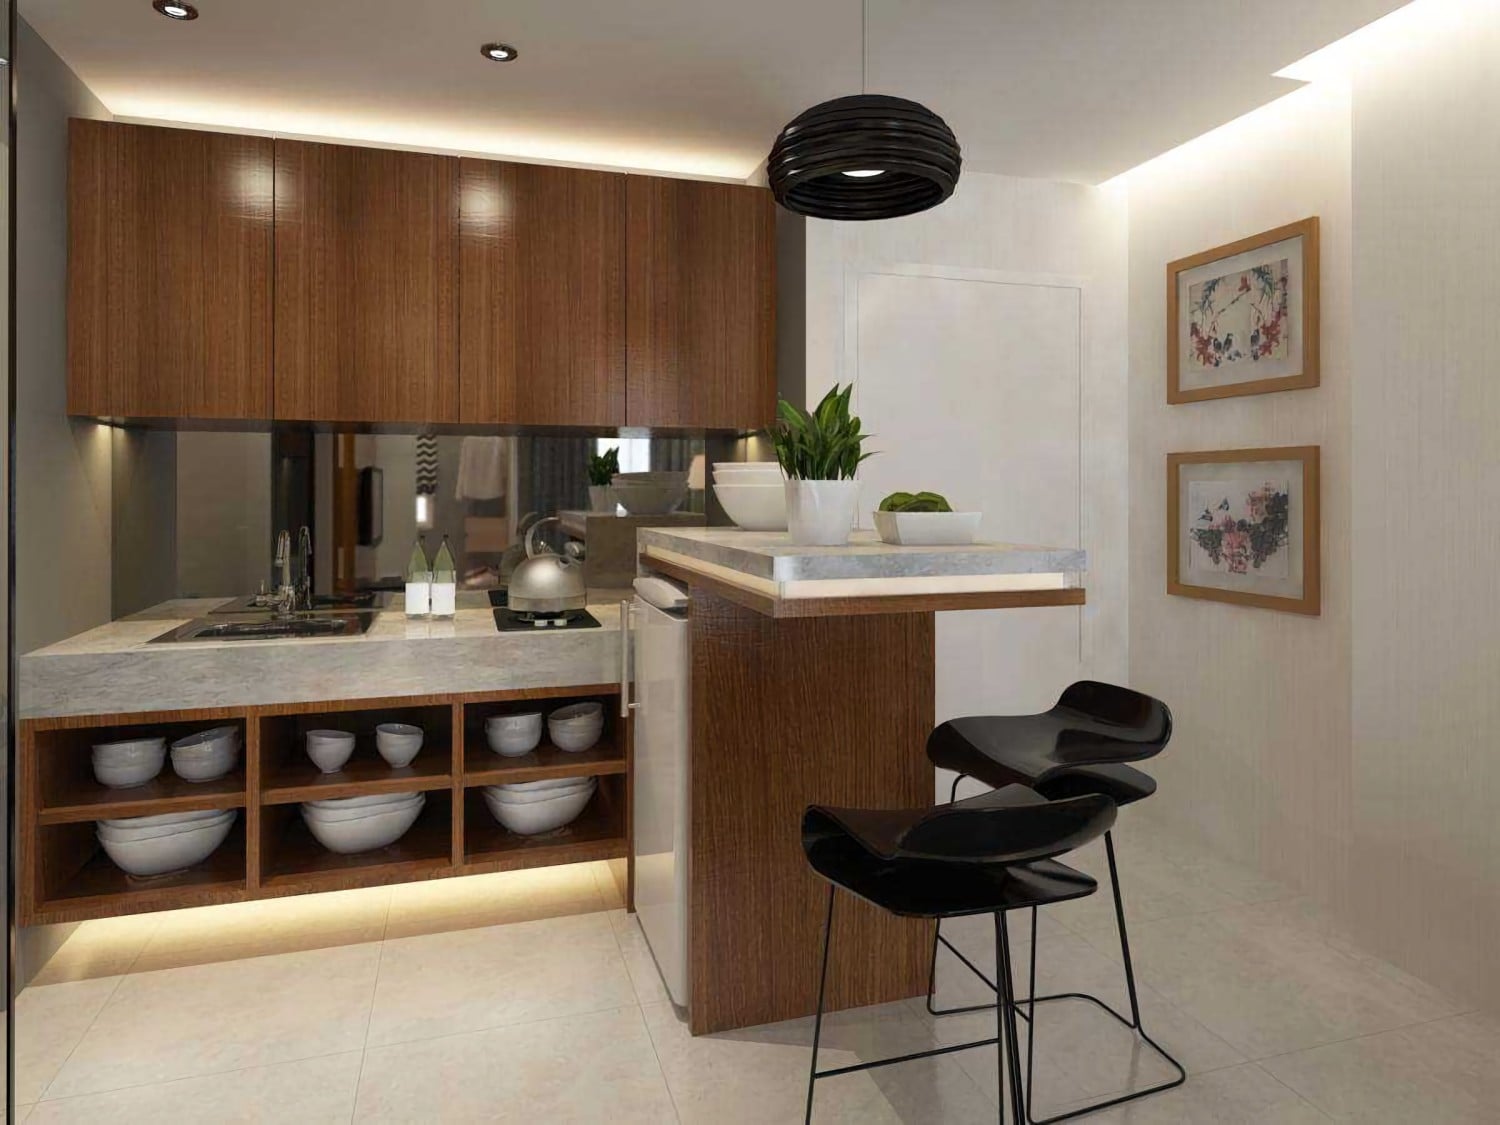 96 Gambar Desain Dapur Minimalis Ala Cafe Yang Wajib Kamu Ketahui Arcadia Design Architect